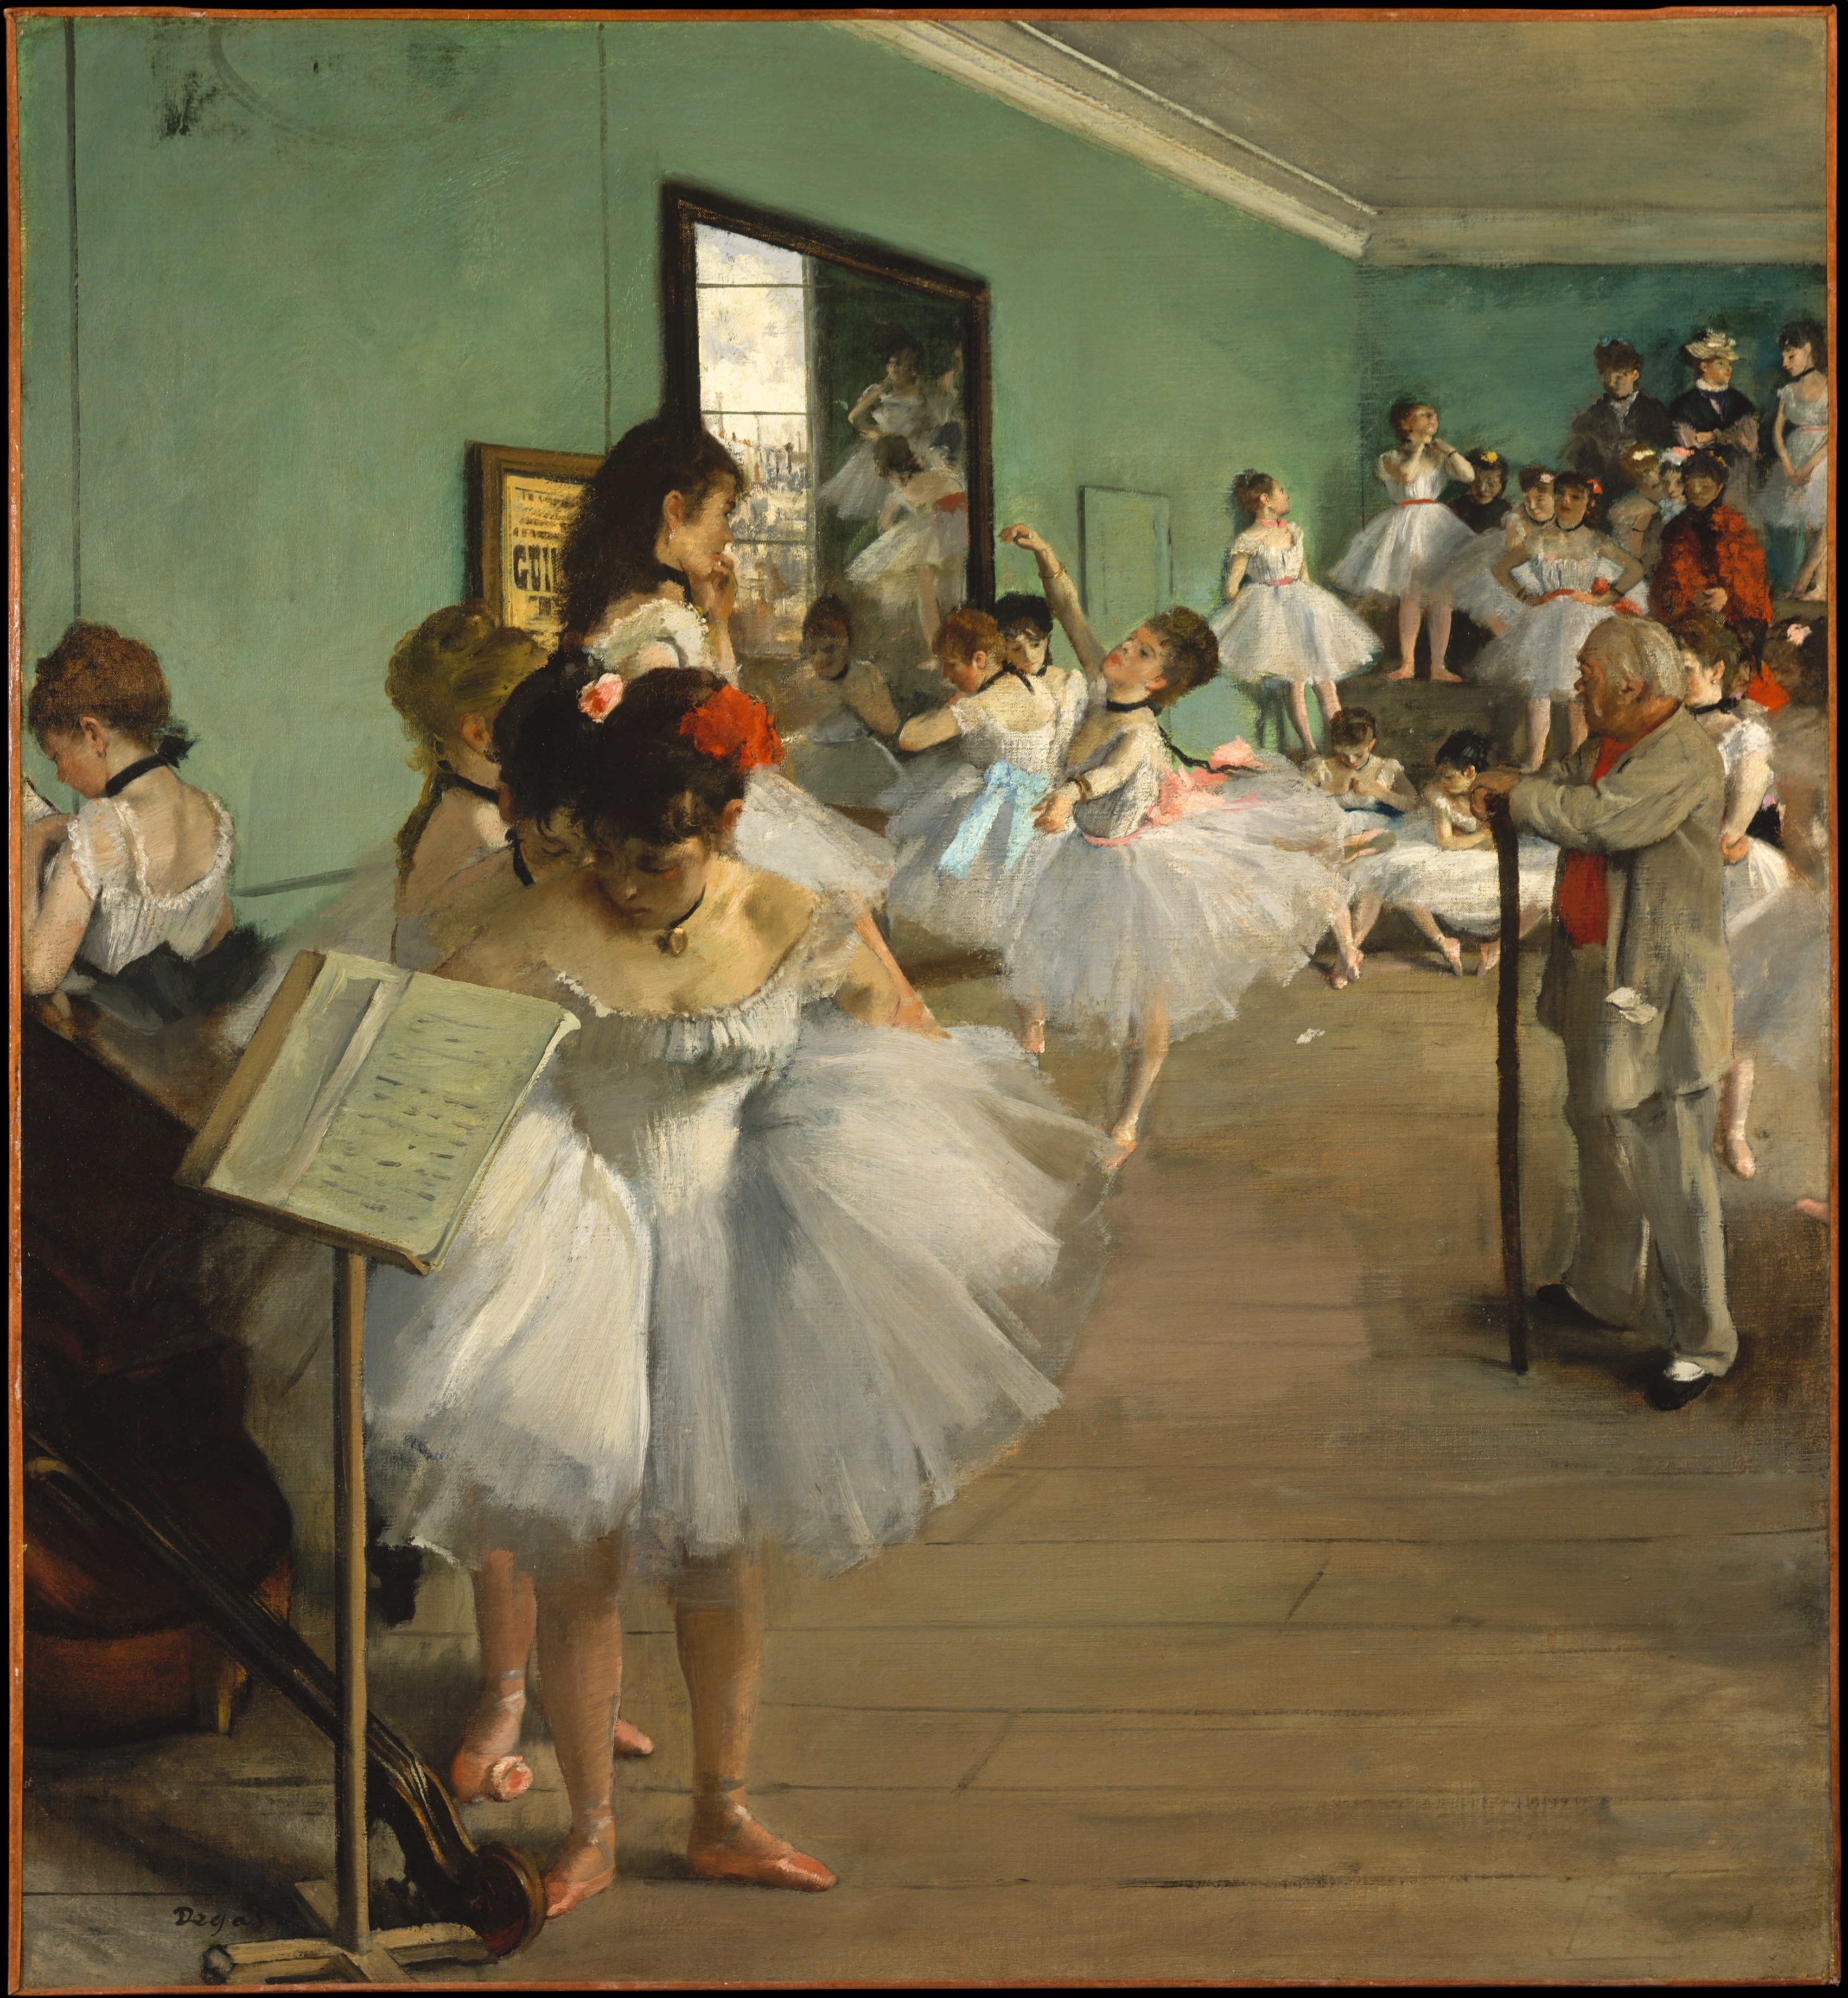 Ora de dans by Edgar Degas - 1874 - 83.5 x 77.2 cm 